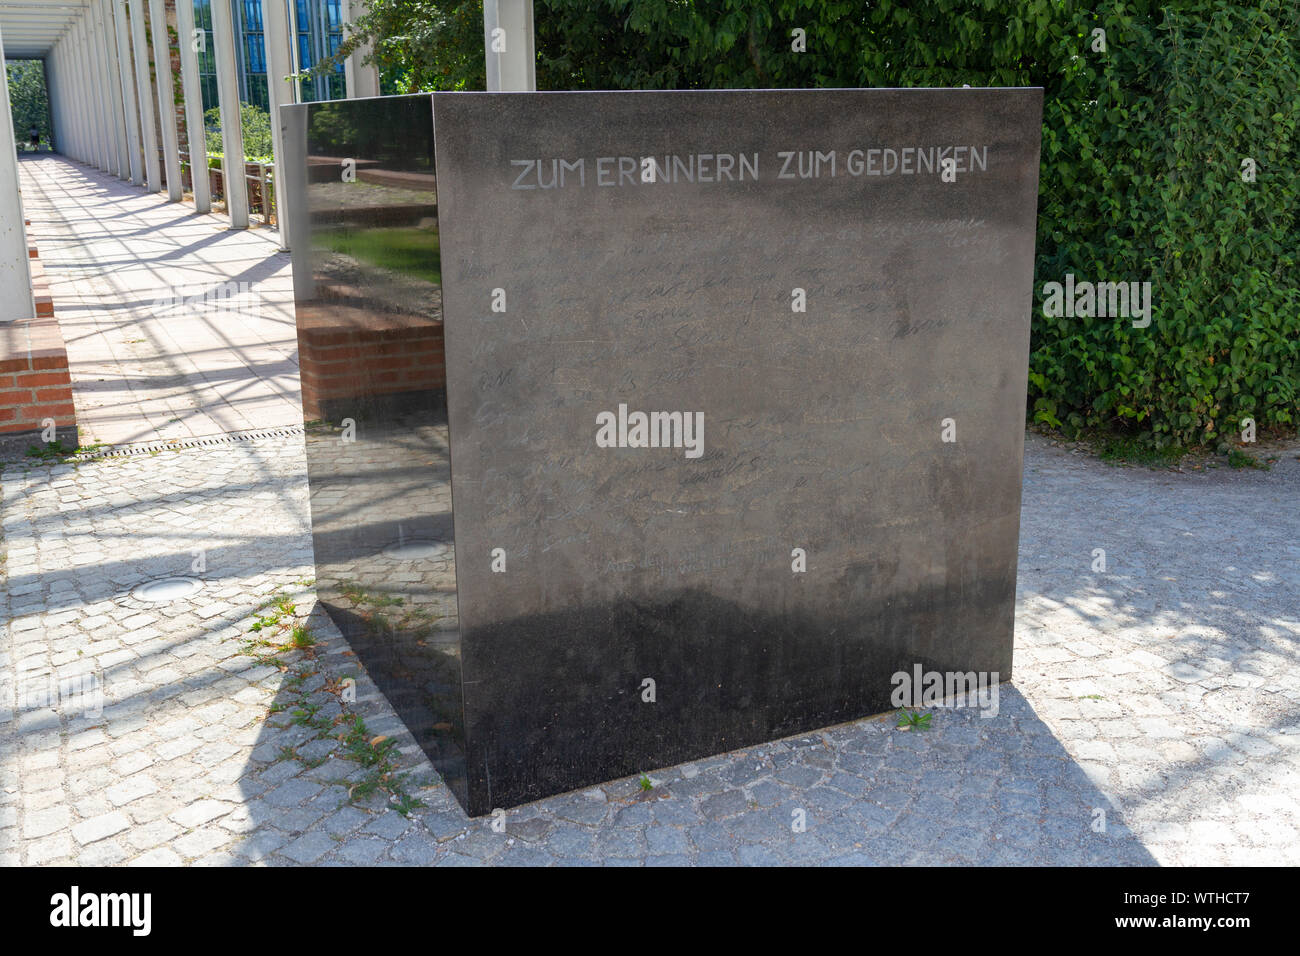 White Rose Holocaust memorial (engraving 'Zum Erinnern Zum Gedenken' or 'For Rememberance For Contemplation'), Munich, Bavaria, Germany. Stock Photo